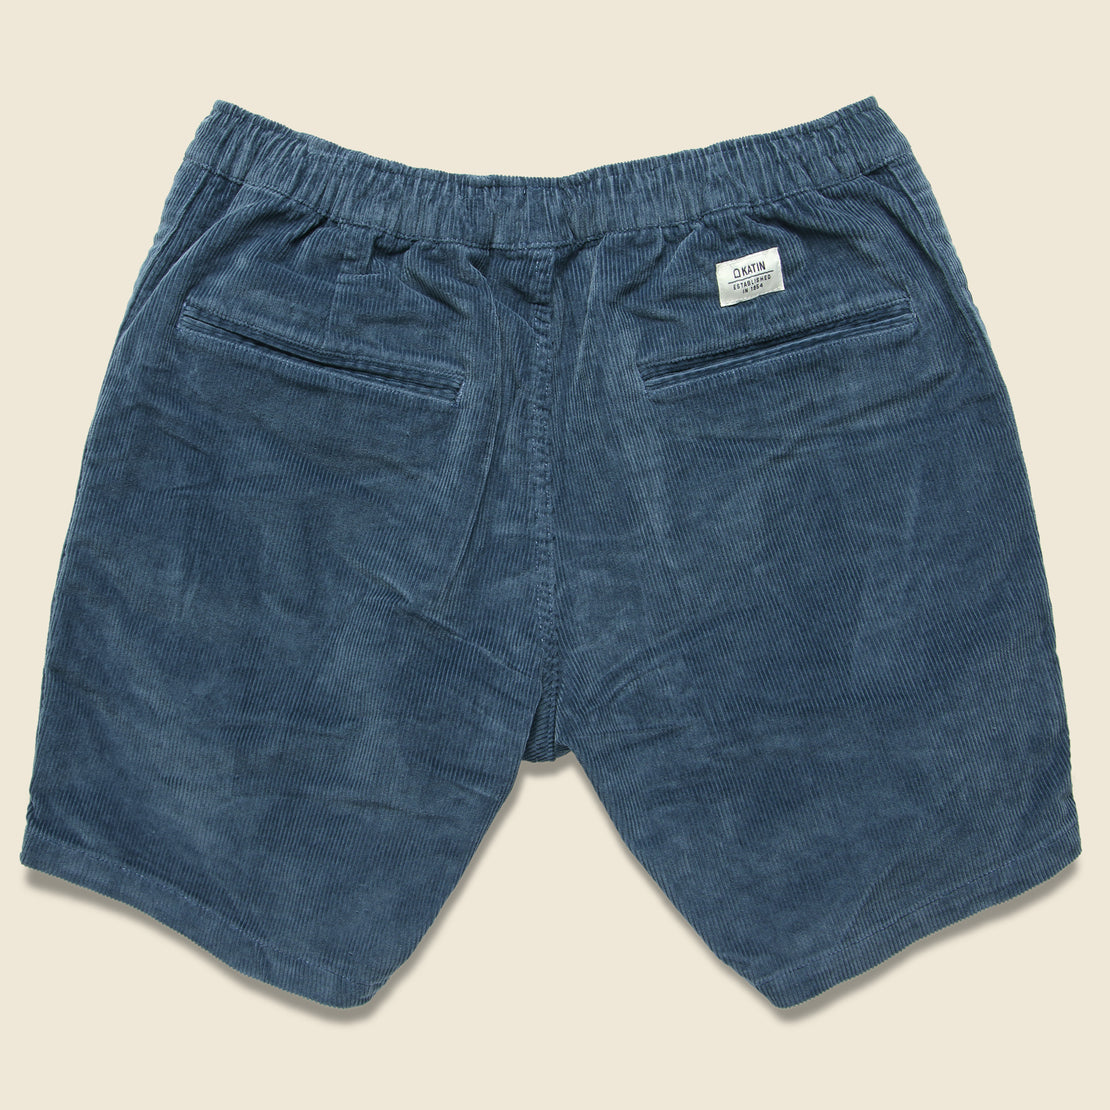 Kord Short - Slate Blue - Katin - STAG Provisions - Shorts - Solid